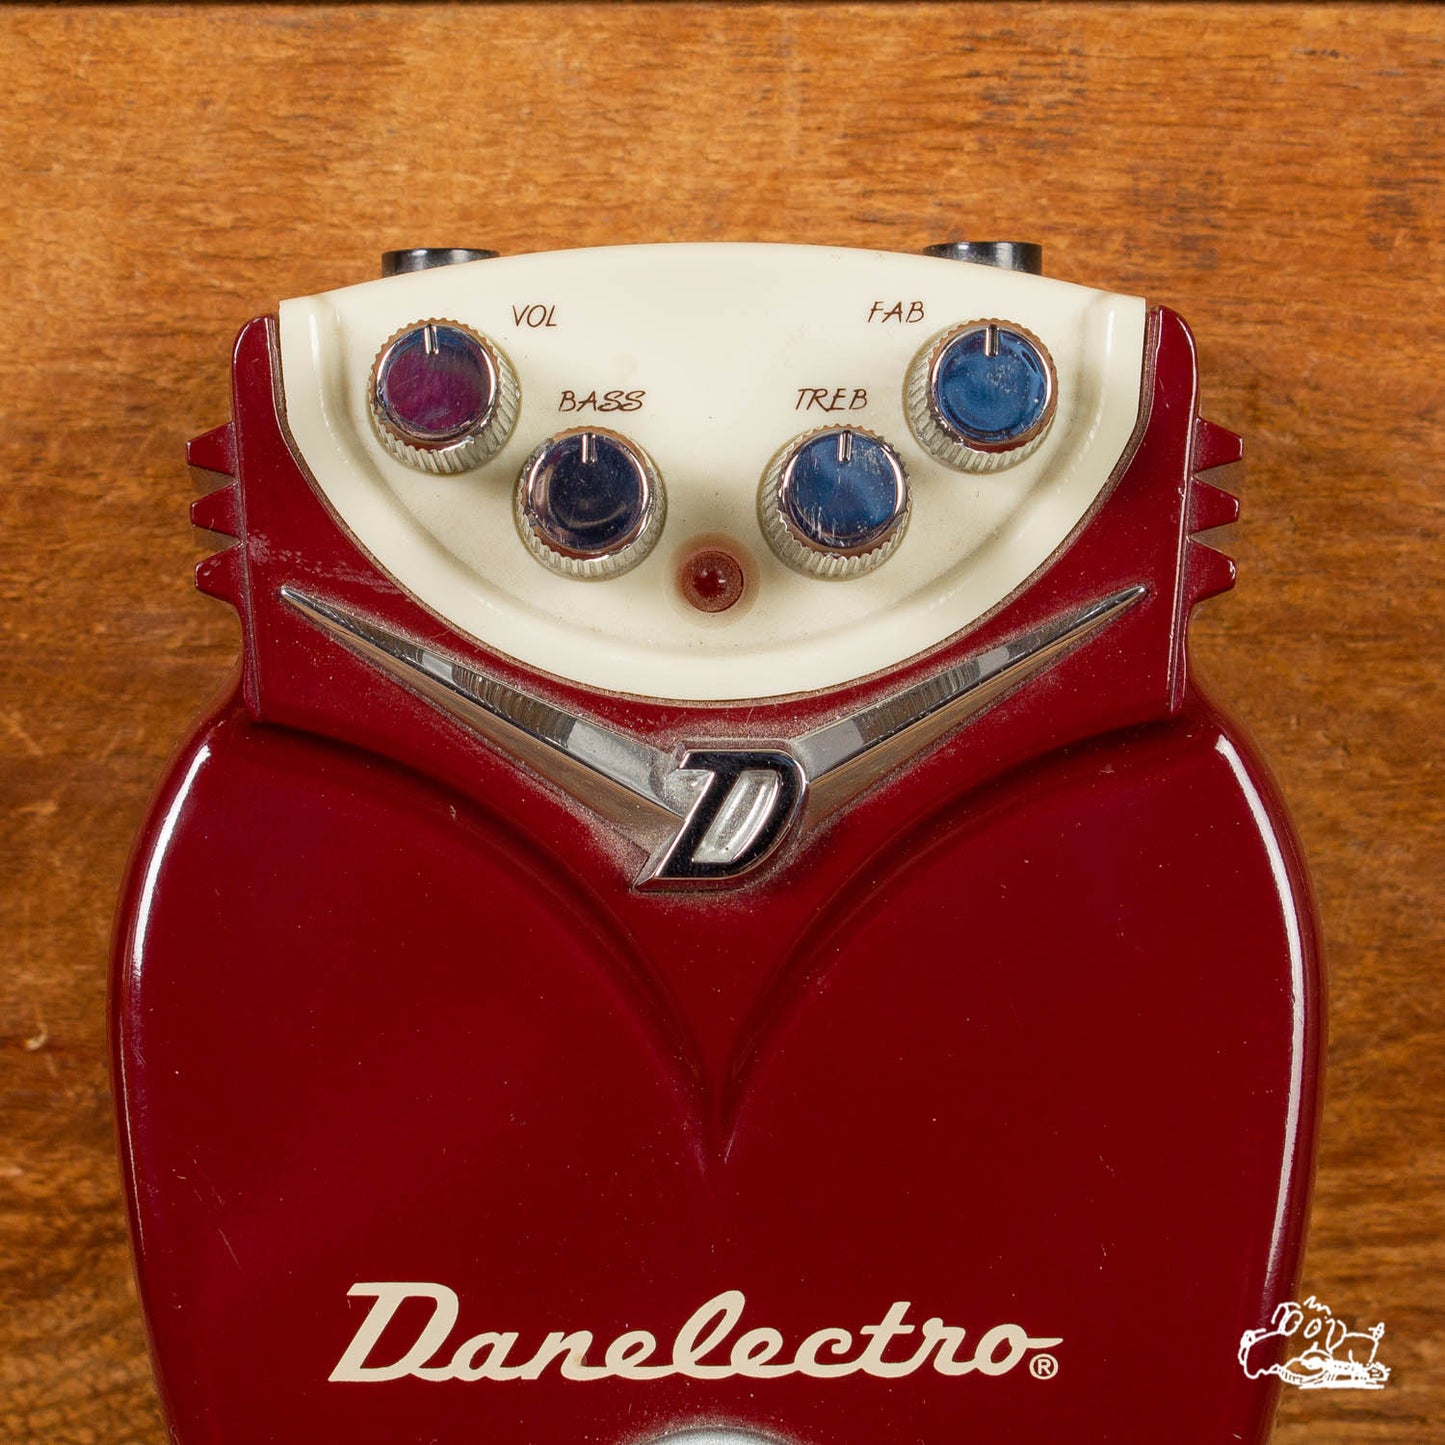 Danelectro DD-1 Fabtone Distortion Pedal